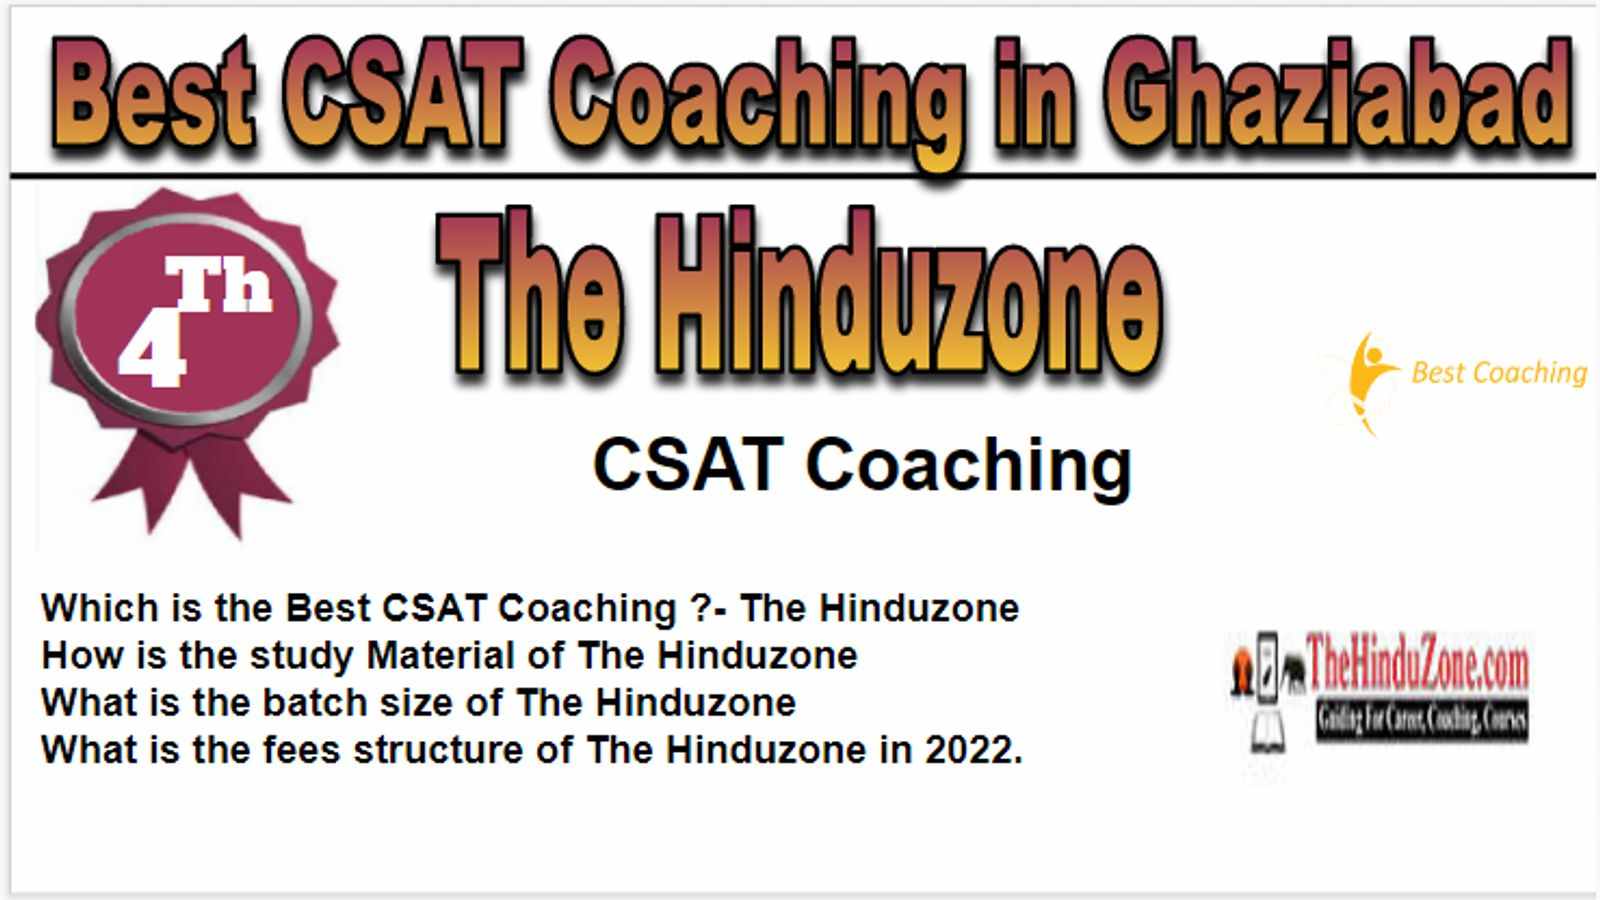 Rank 4 Best CSAT Coaching in Ghaziabad